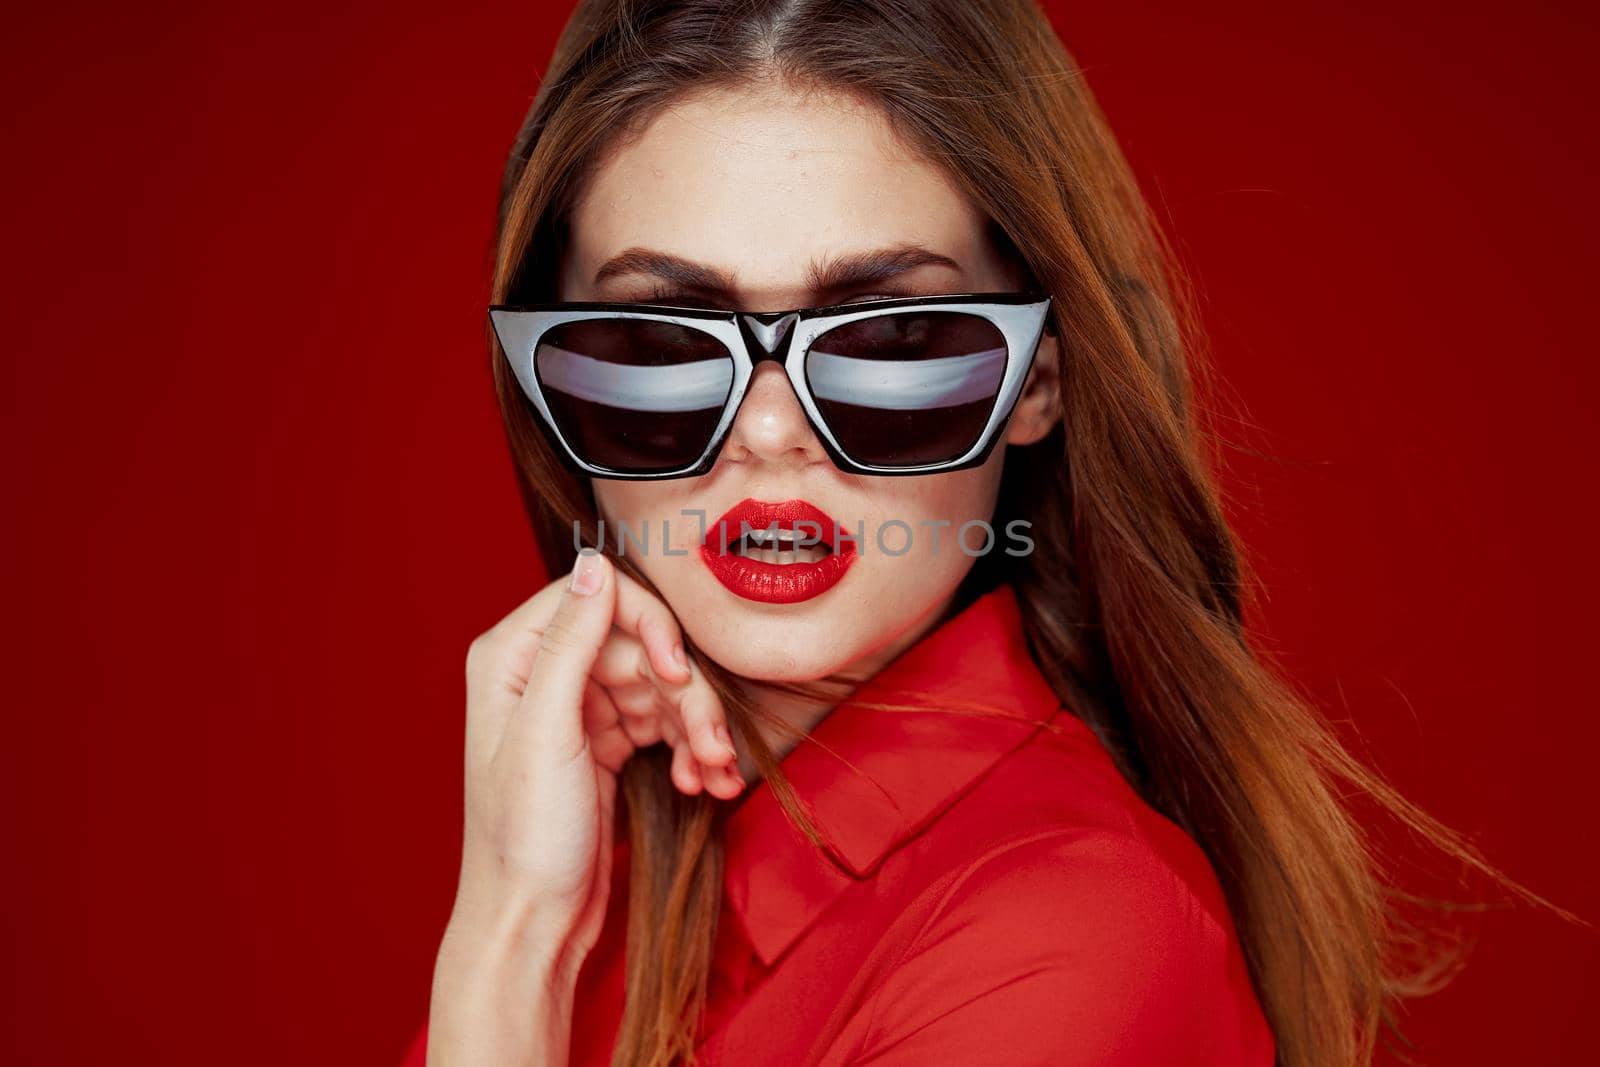 glamorous woman wearing sunglasses red shirt hairstyle model by Vichizh